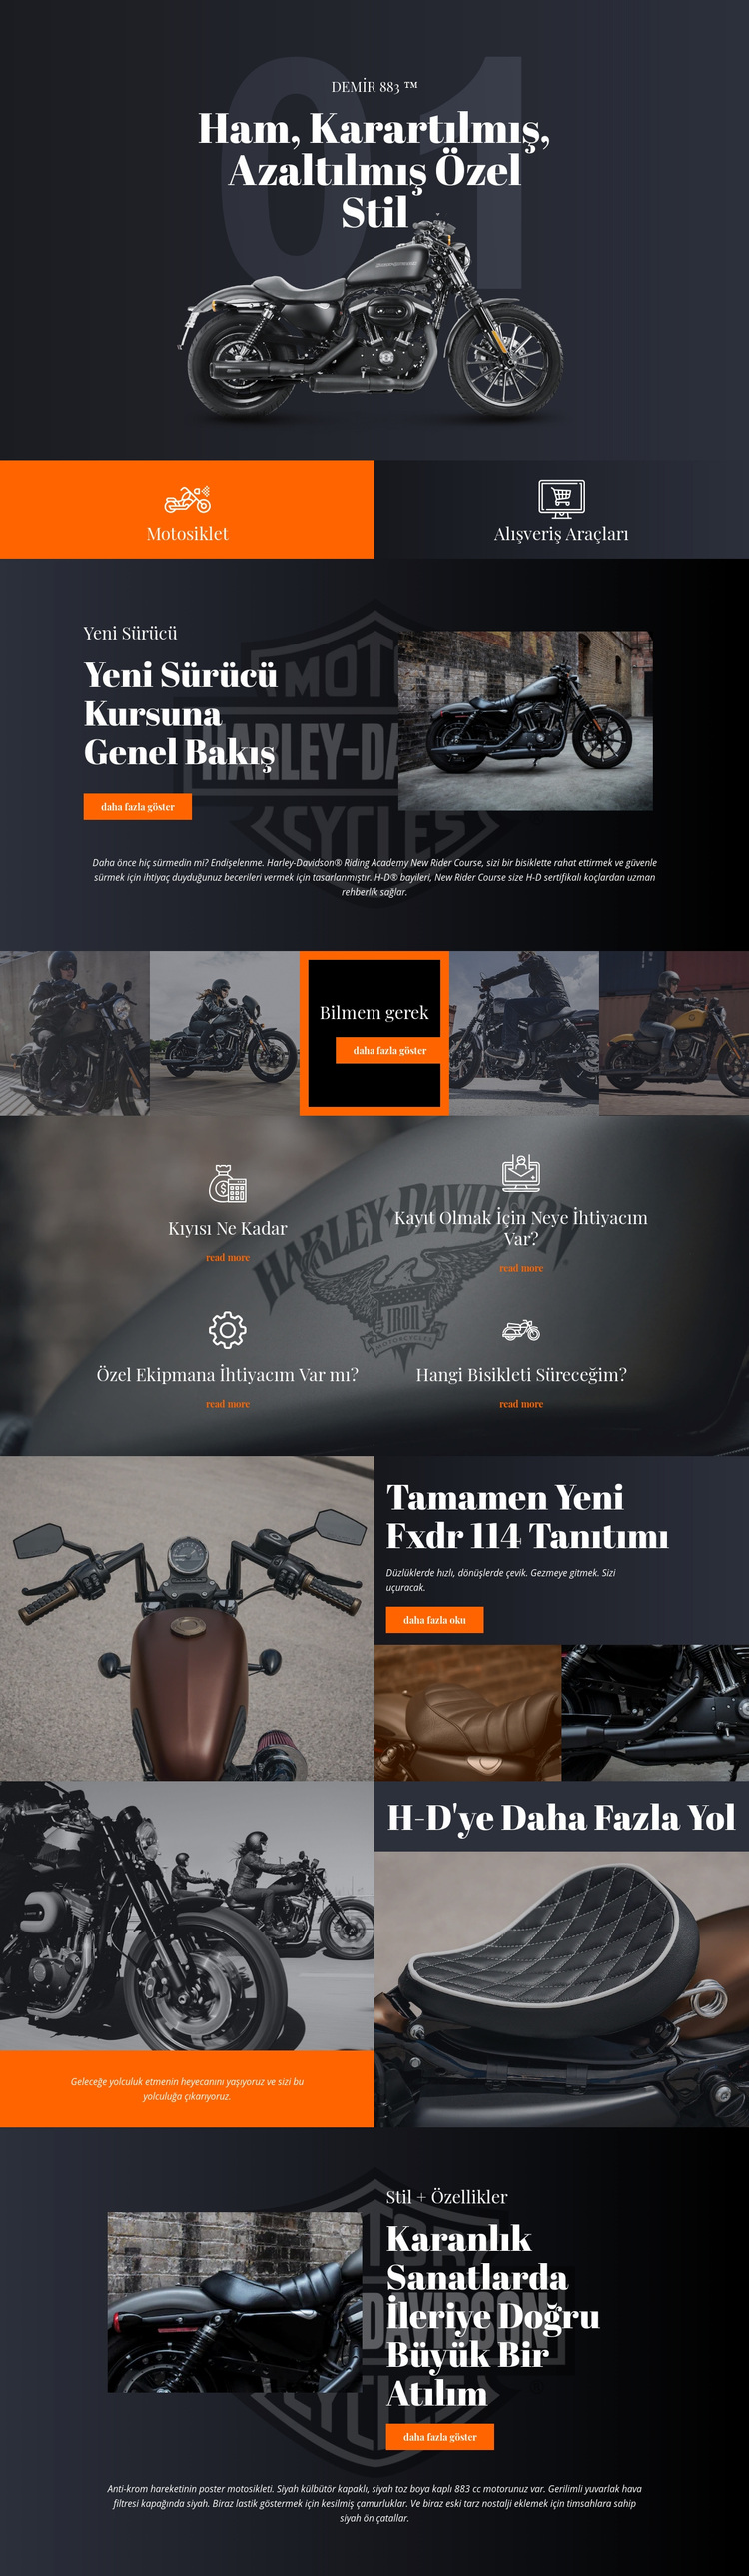 Harley Davidson WordPress Teması